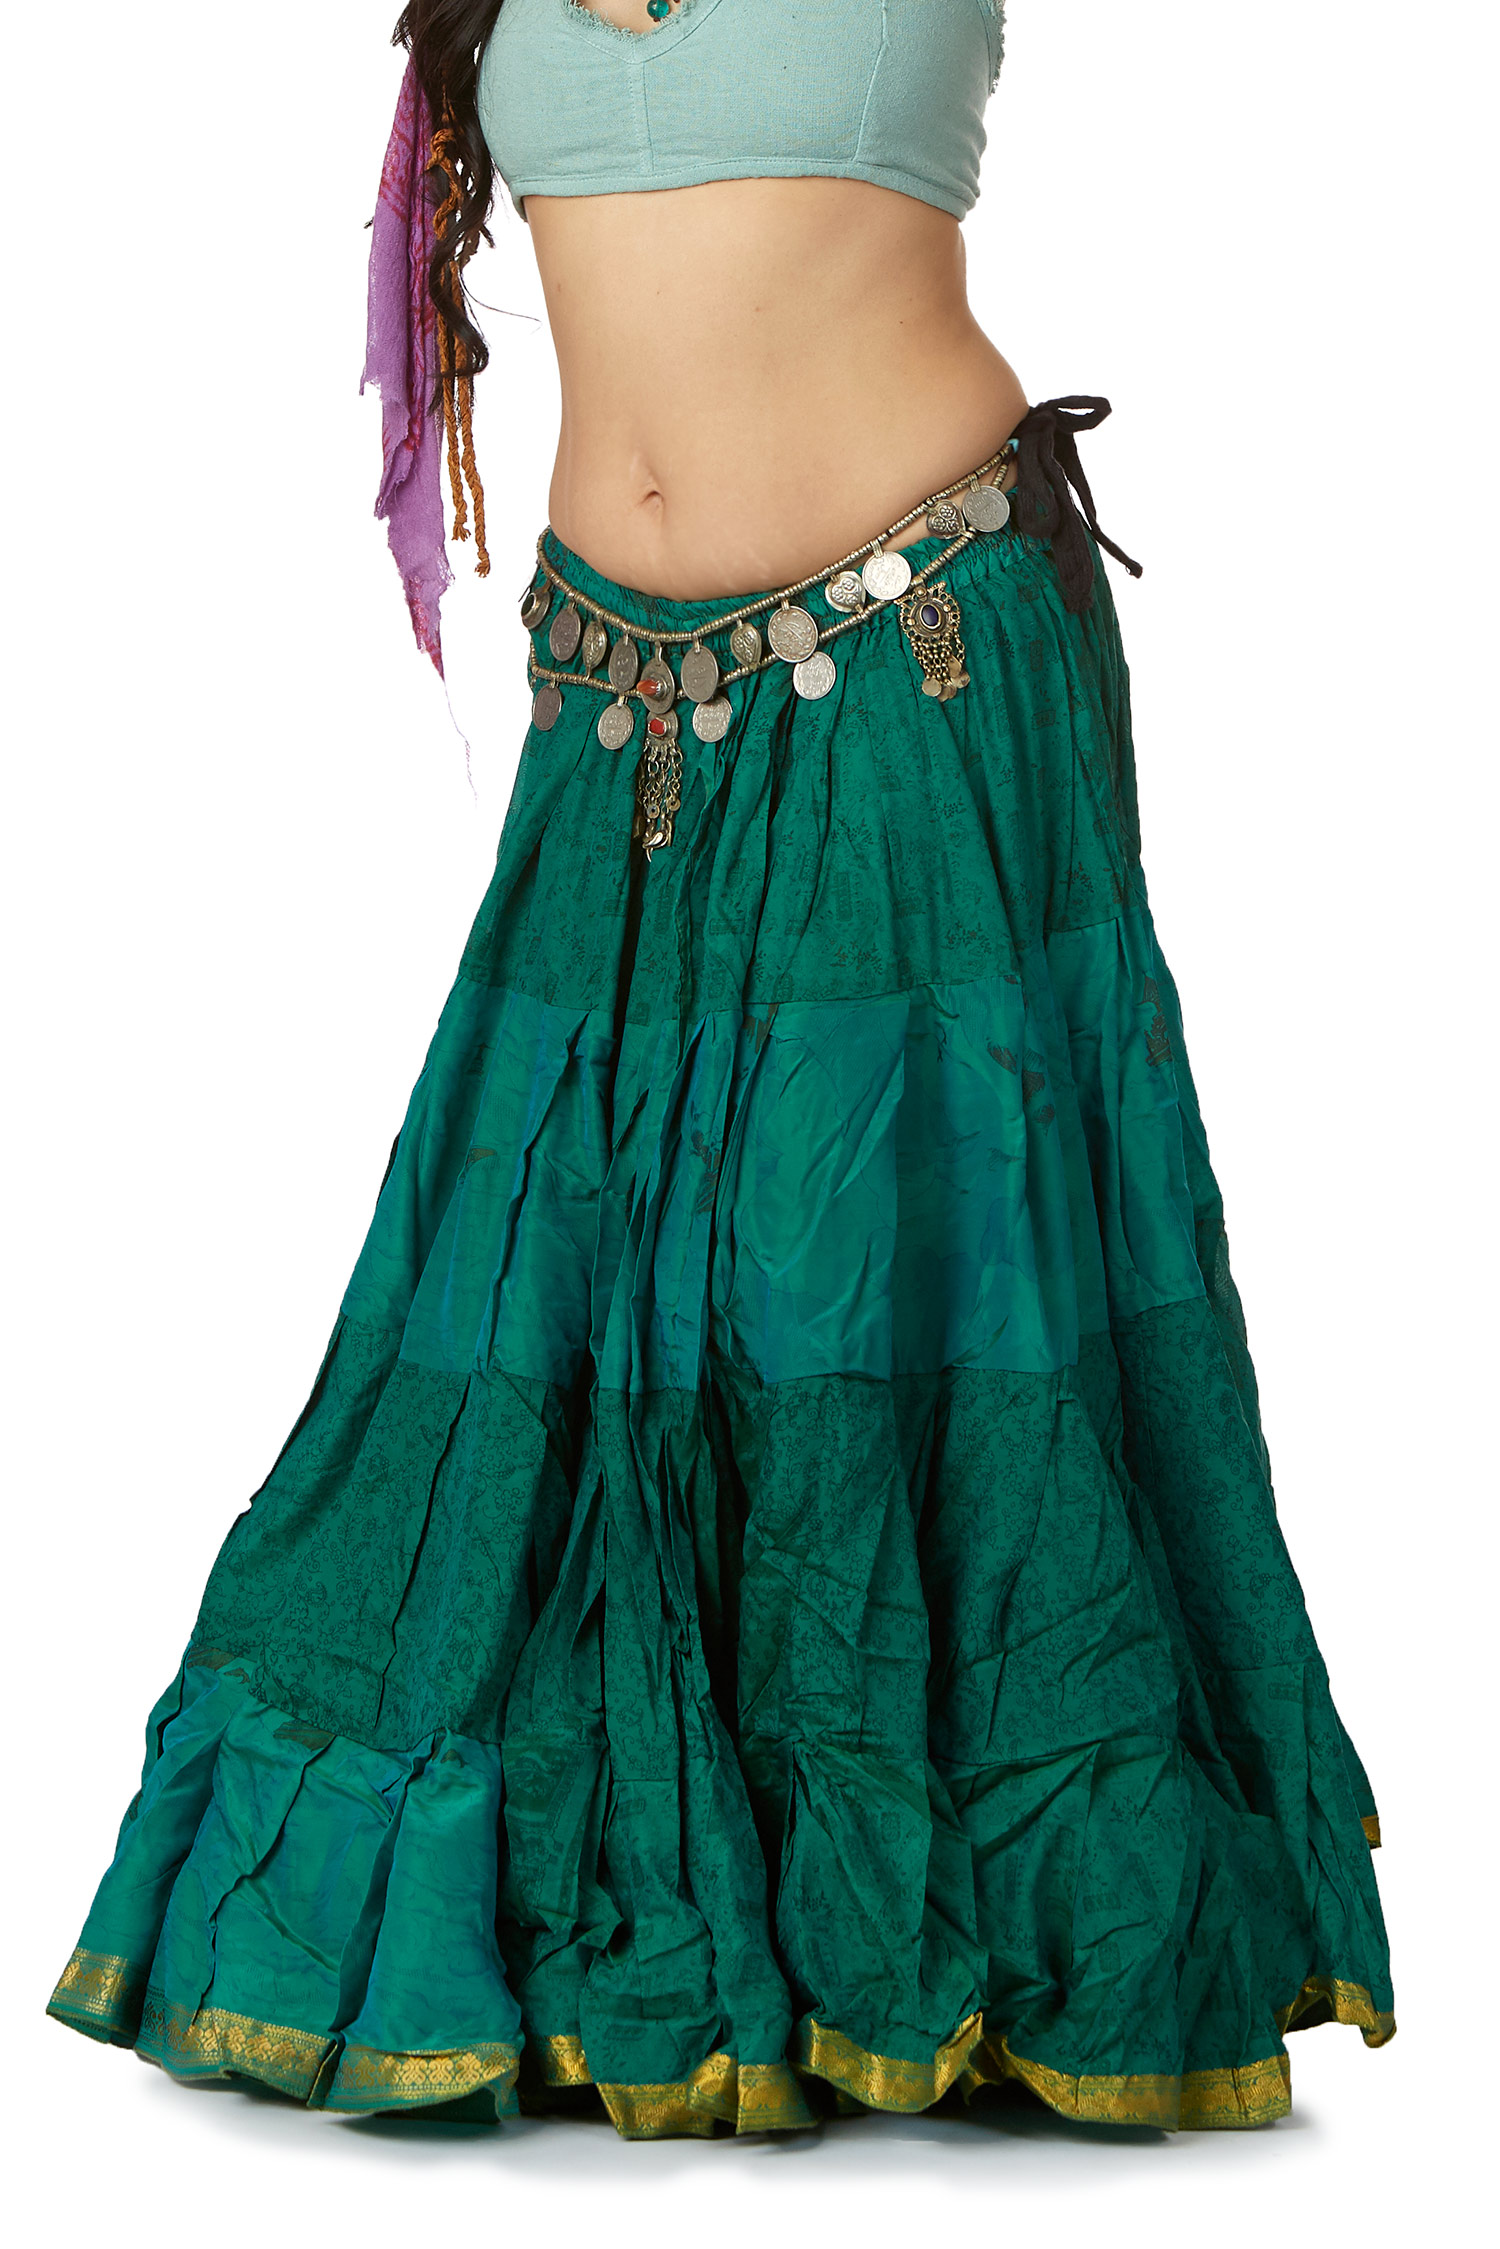 25 Yard Gypsy Bellydance Skirt, tribal fusion dance skirt | Altshop UK